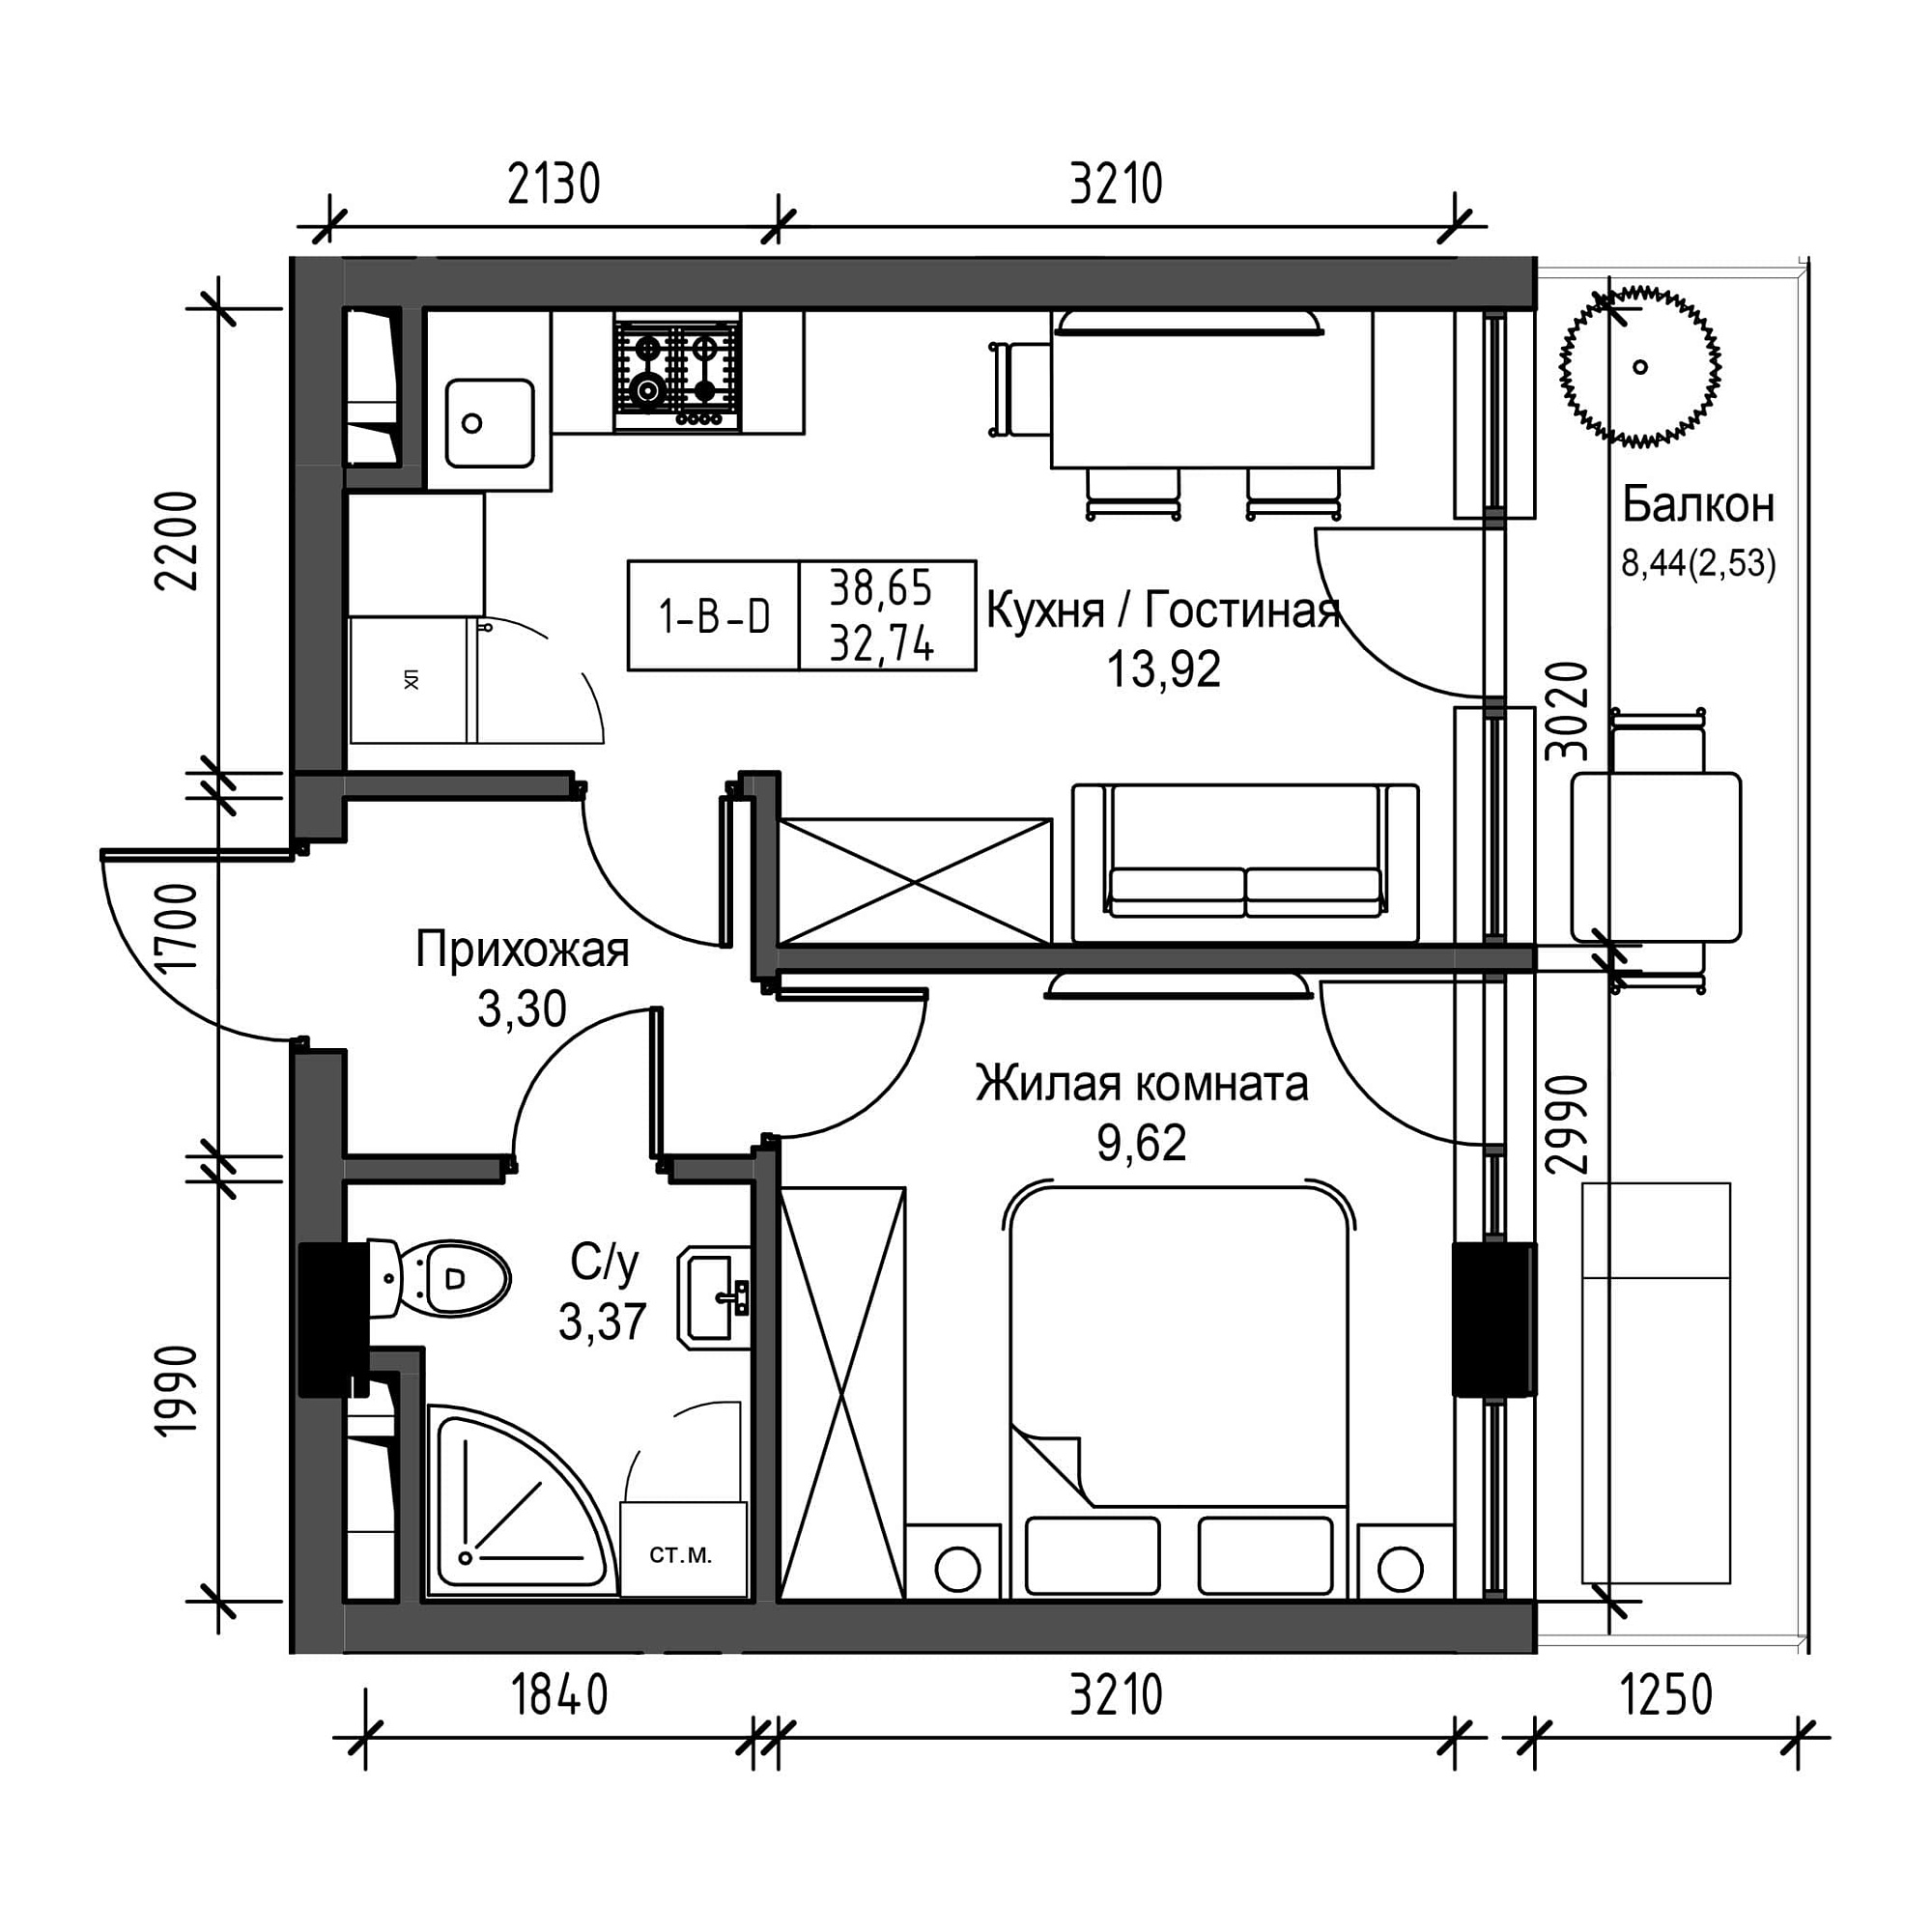 Planning 1-rm flats area 32.74m2, UM-001-06/0022.